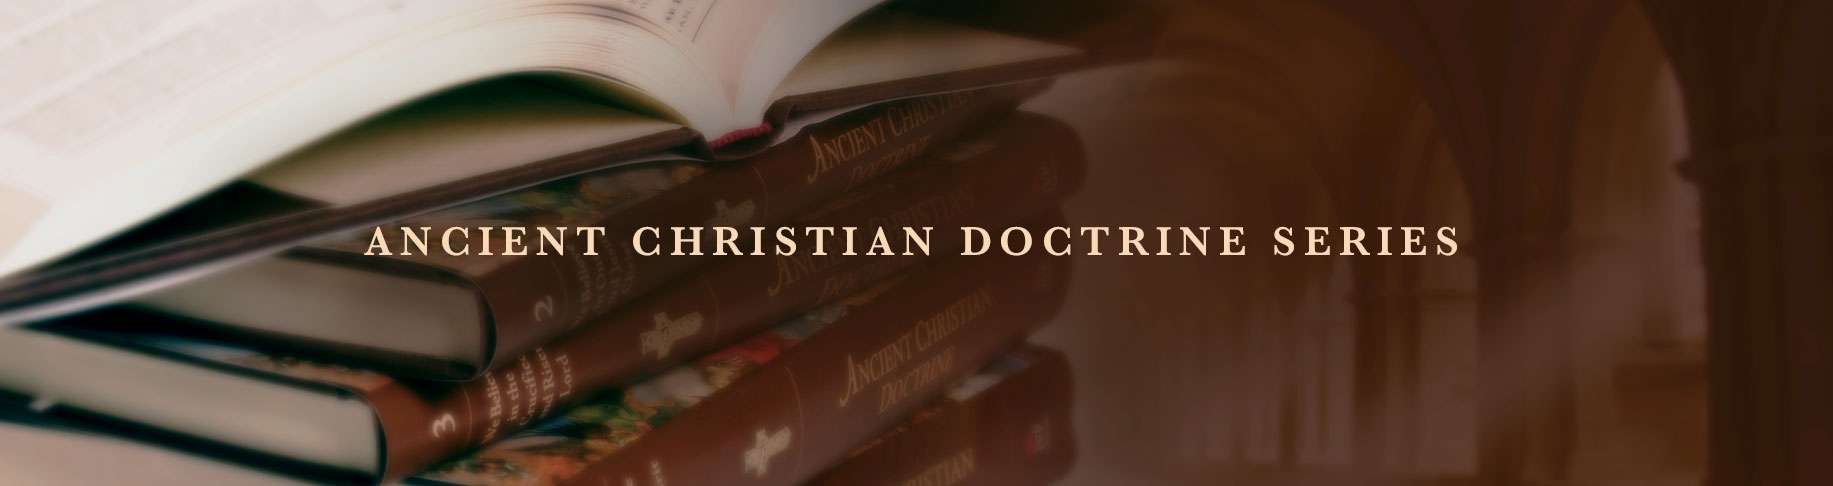 Ancient Christian Doctrine Series